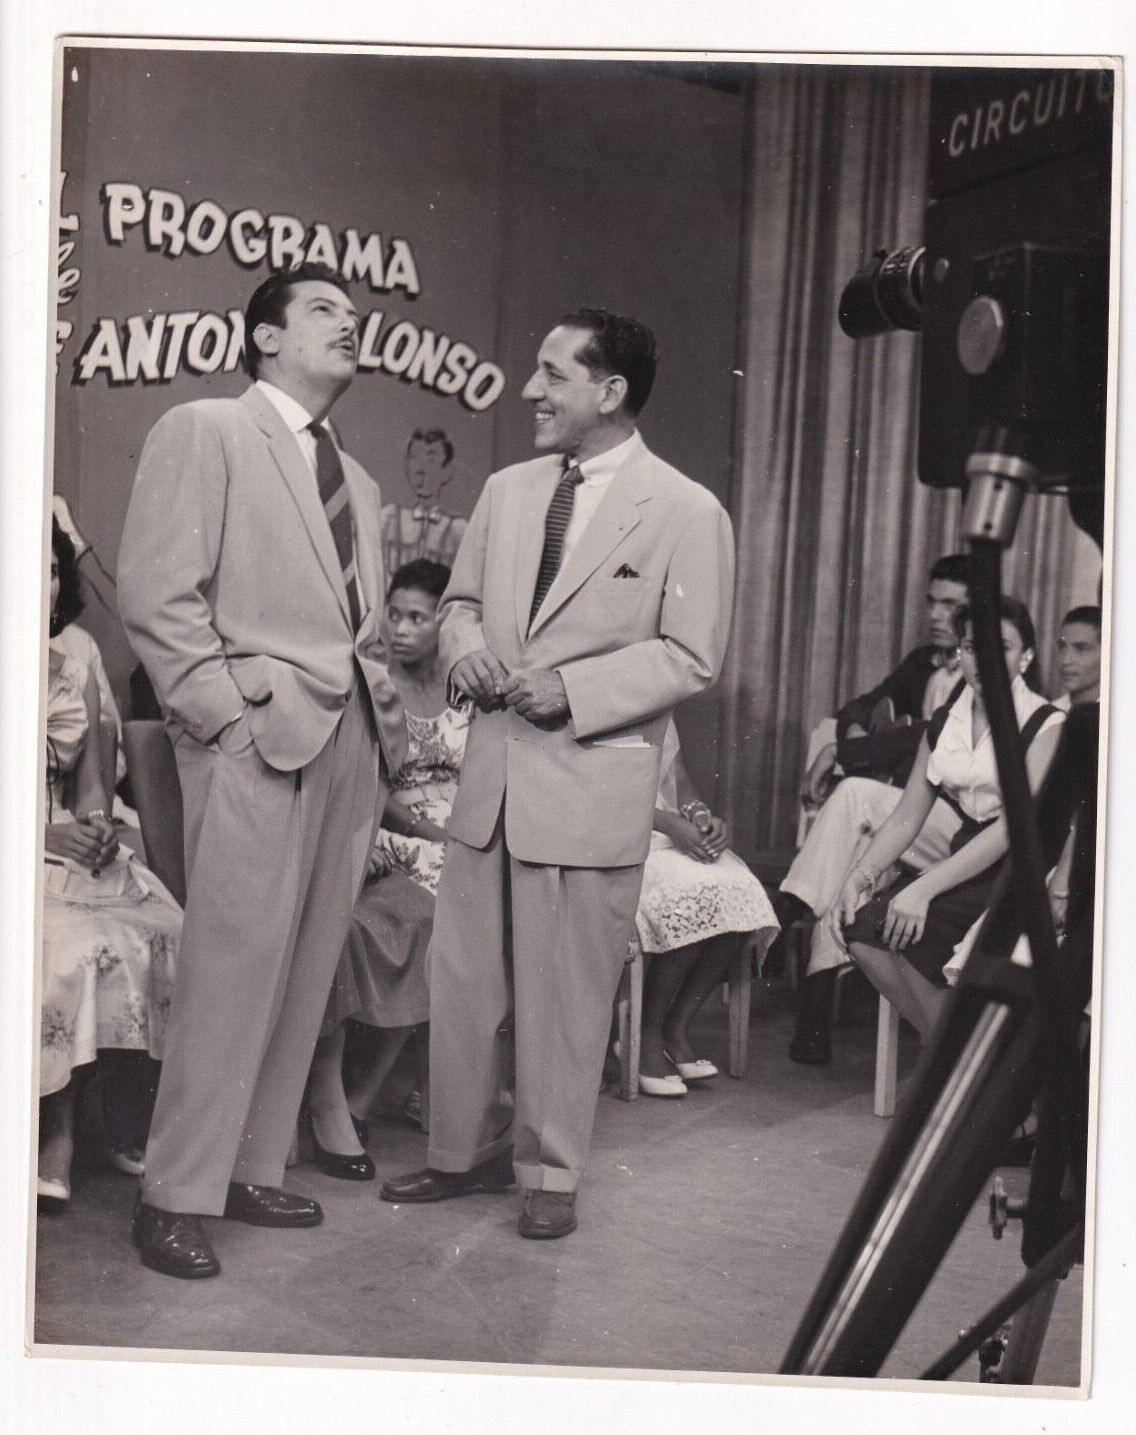 CUBAN TV LEGACY TALENT SHOW JOSE ANTONIO ALONSO PROGRAM CUBA 1950s Photo Y J 338